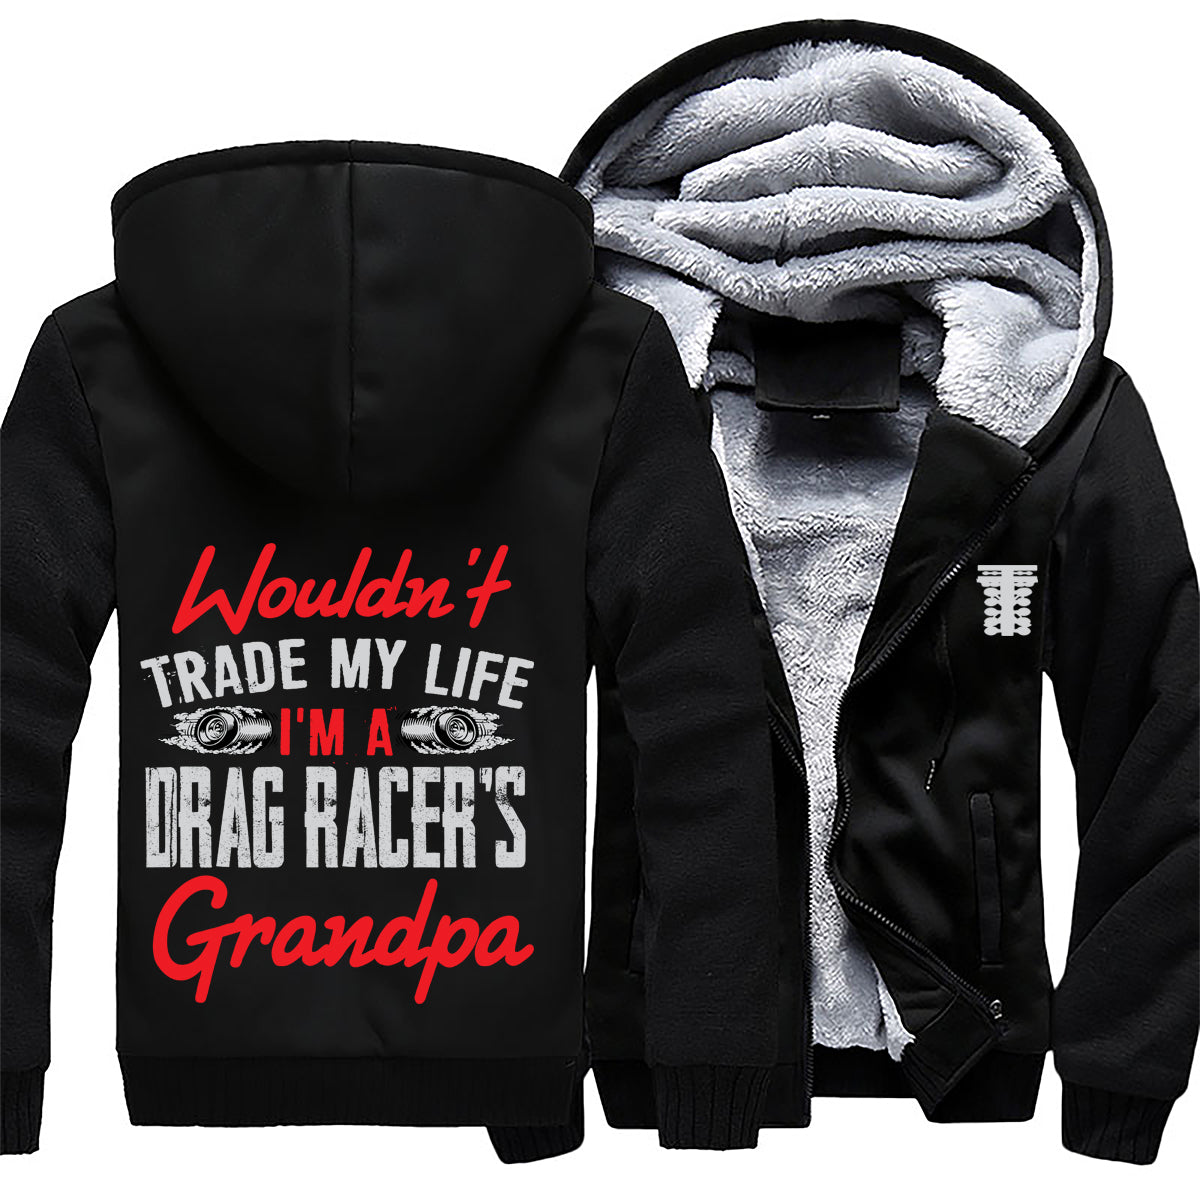 I'm A Drag Racer's Grandpa Jacket